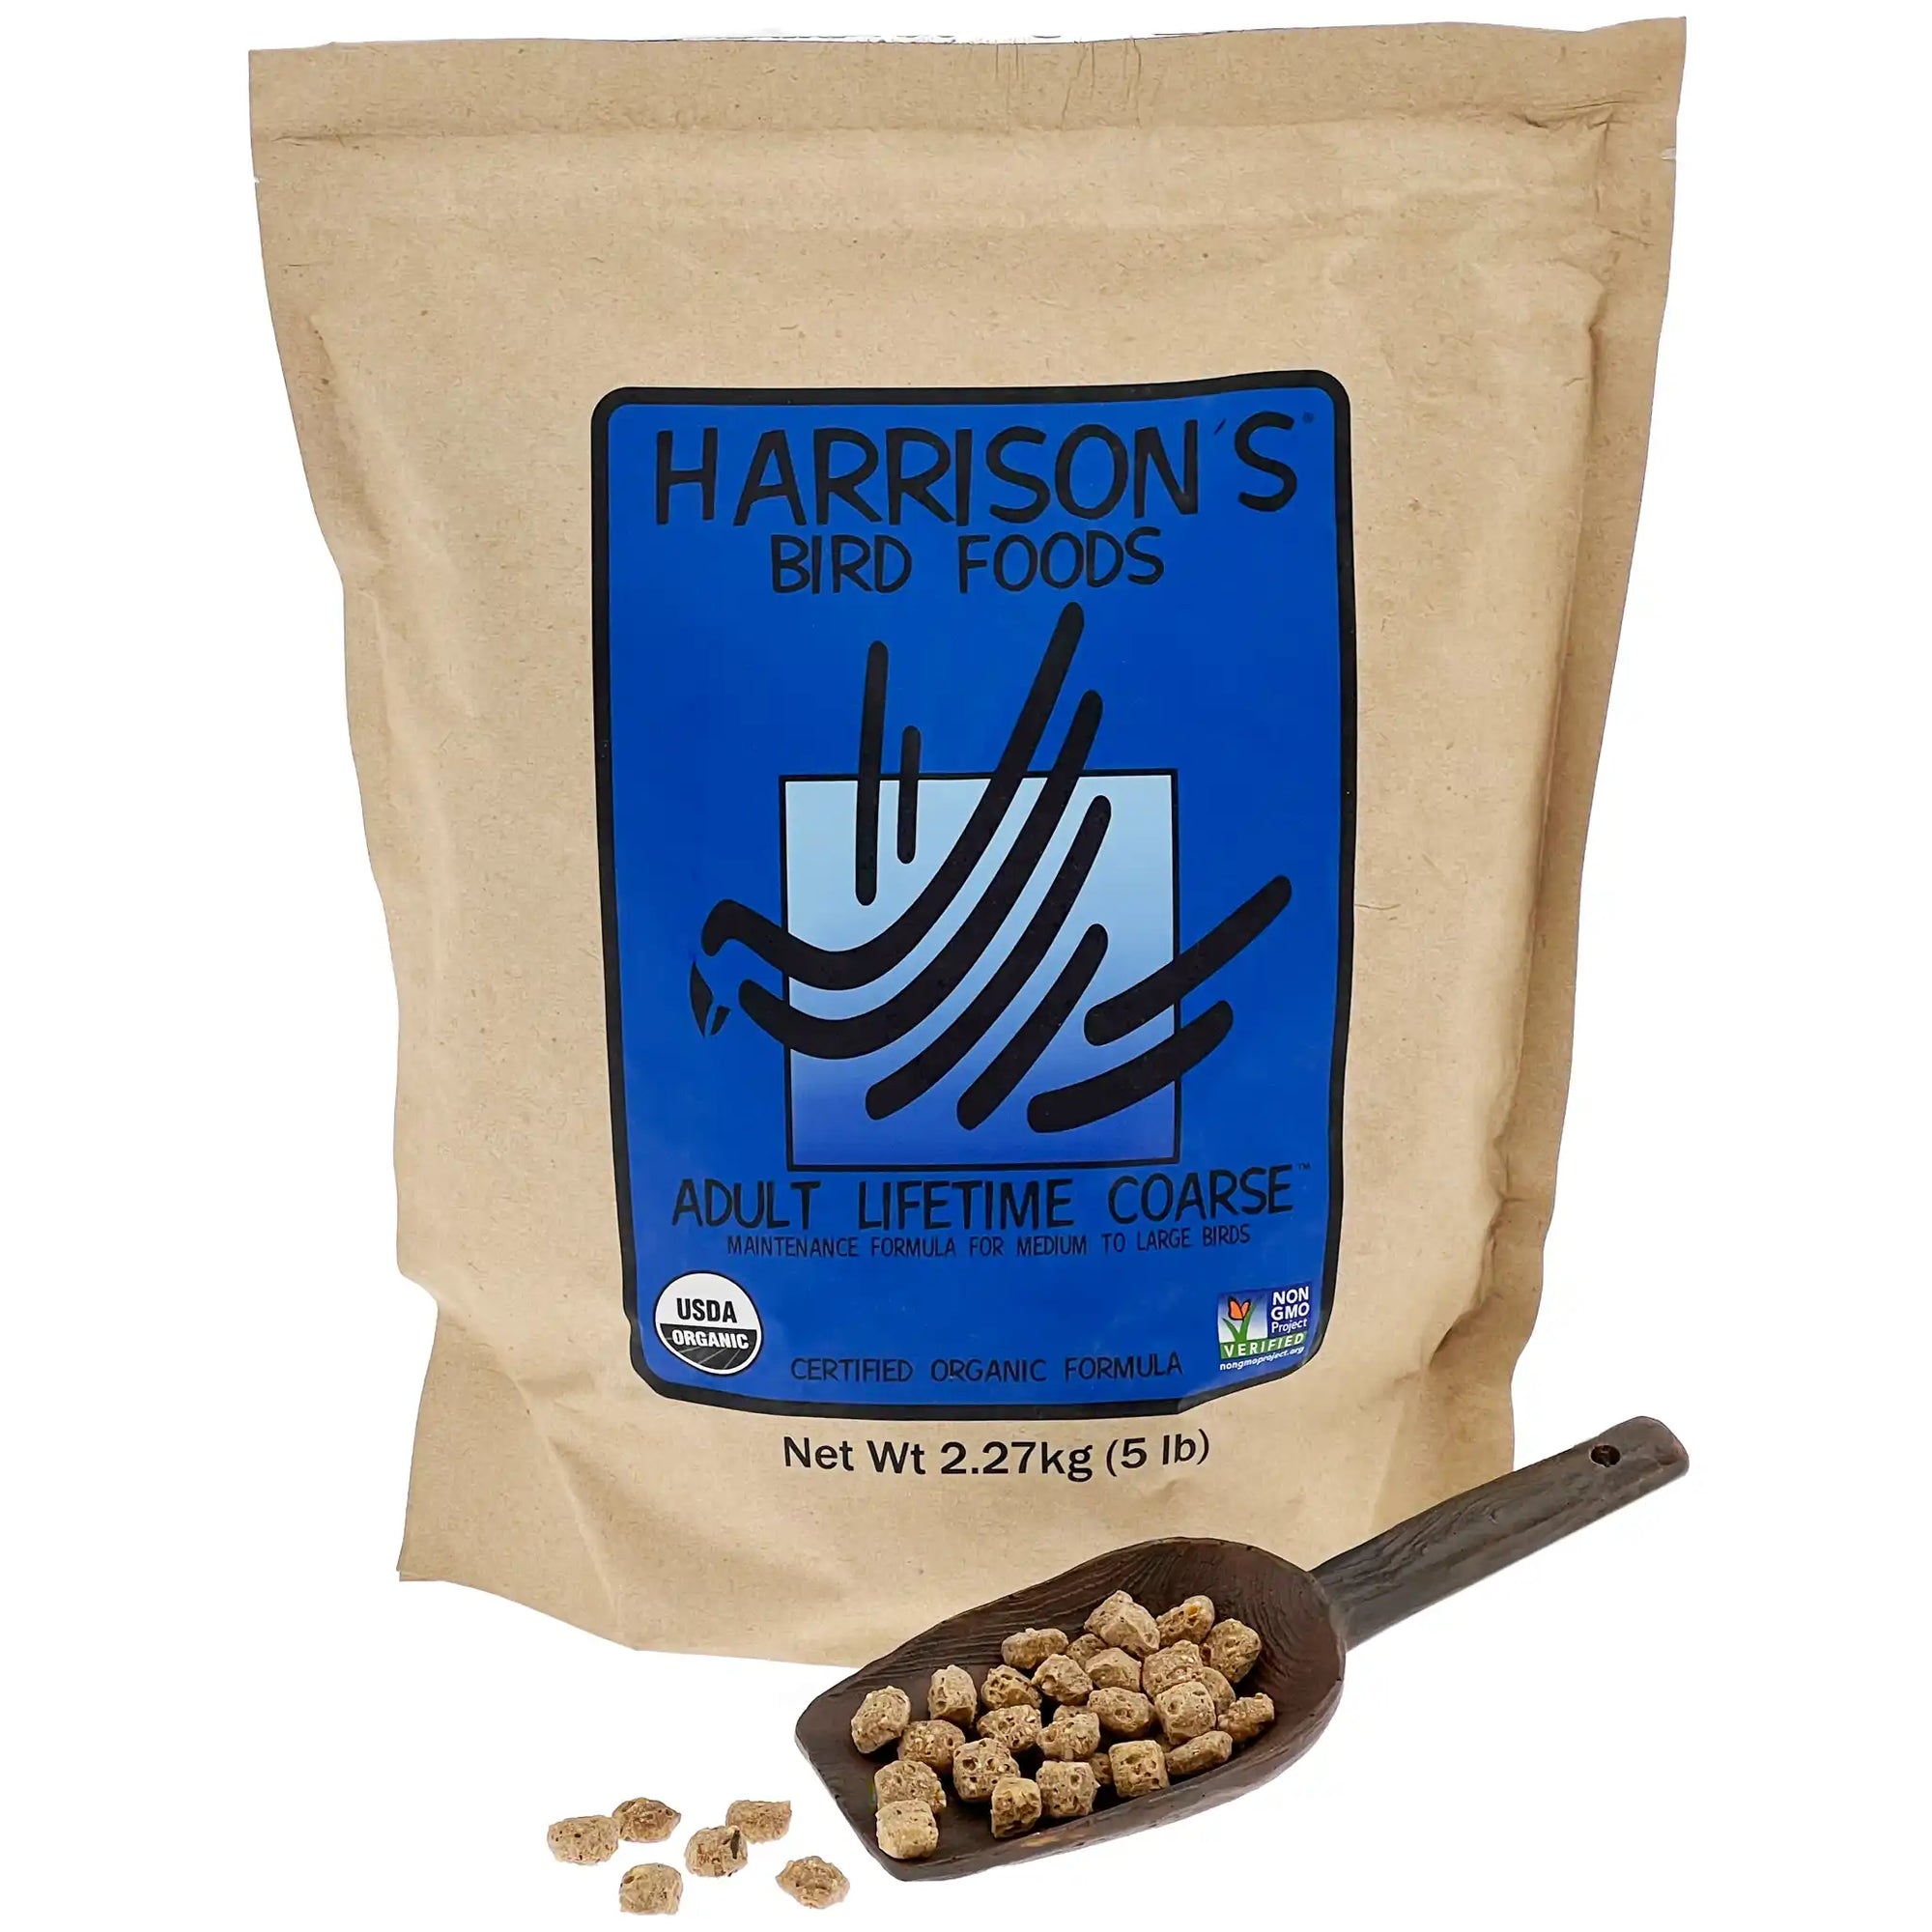 Harrisons lifetime coarse 5lb bag